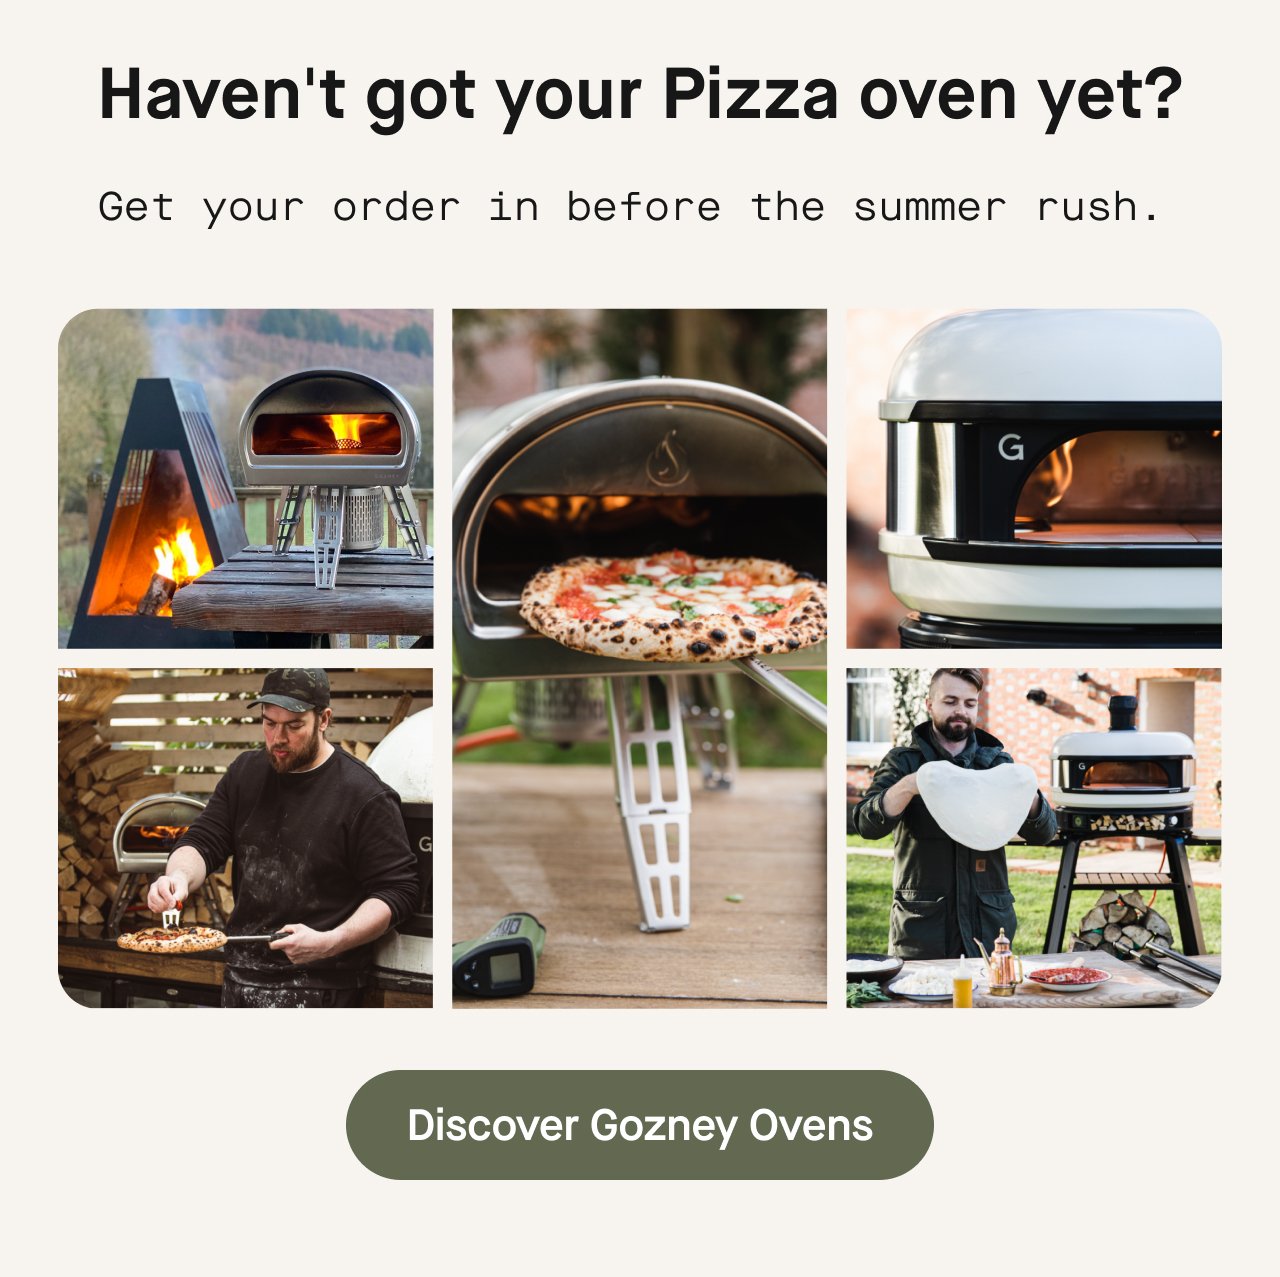 Discover Gozney Ovens